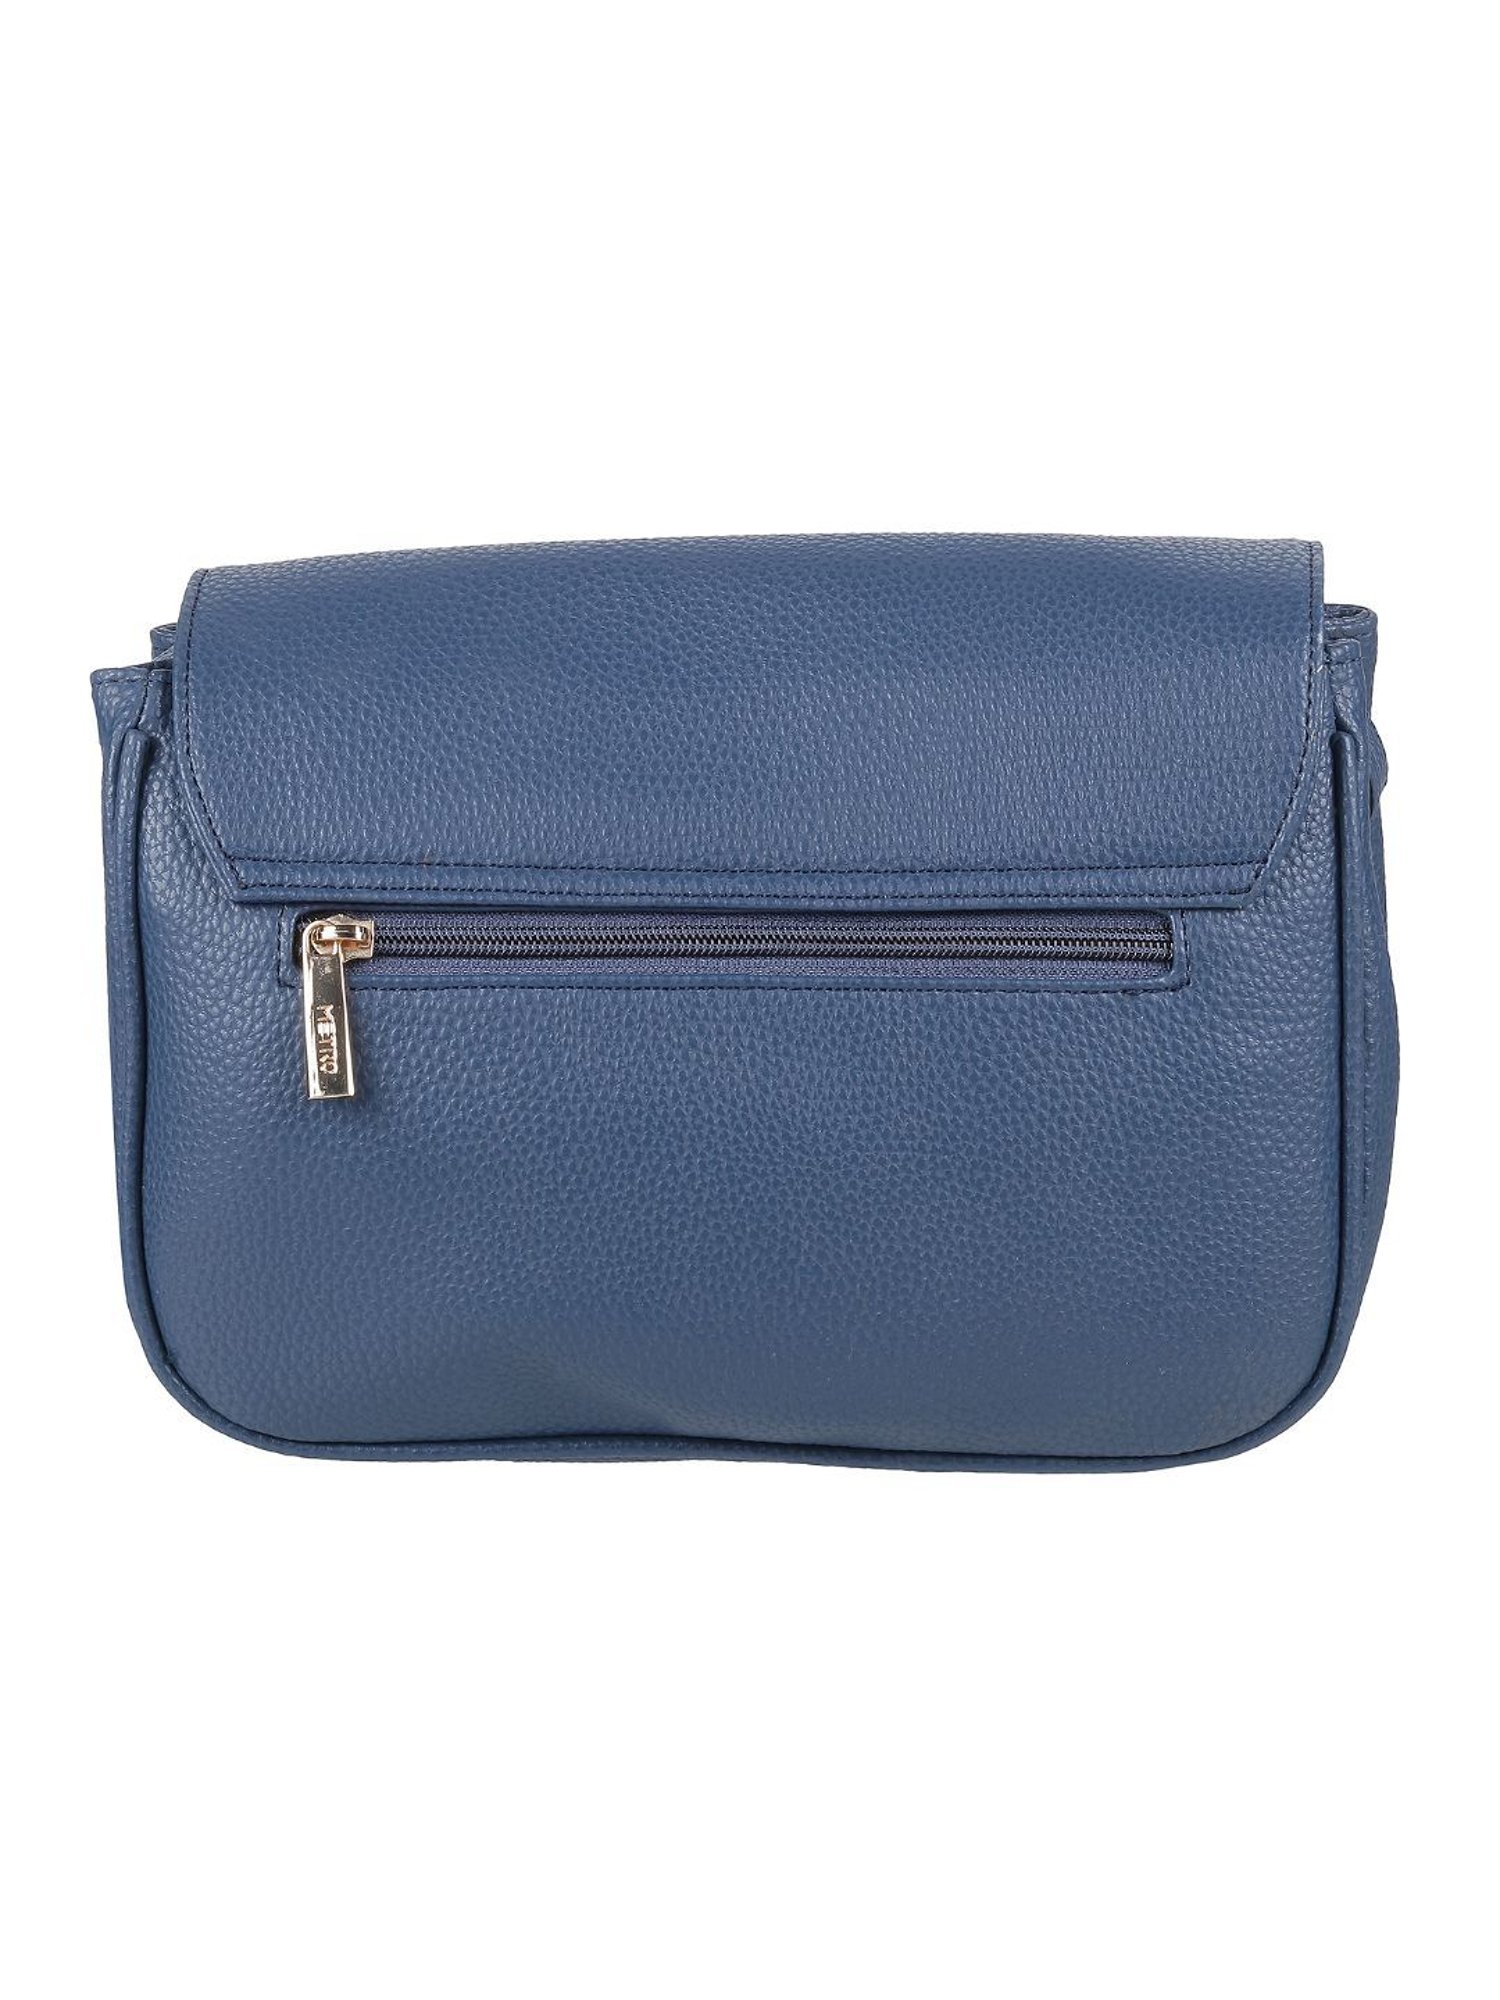 Metro Women Tote bag | Ladies Purse Handbag (66-8299-Green) : Amazon.in:  Shoes & Handbags